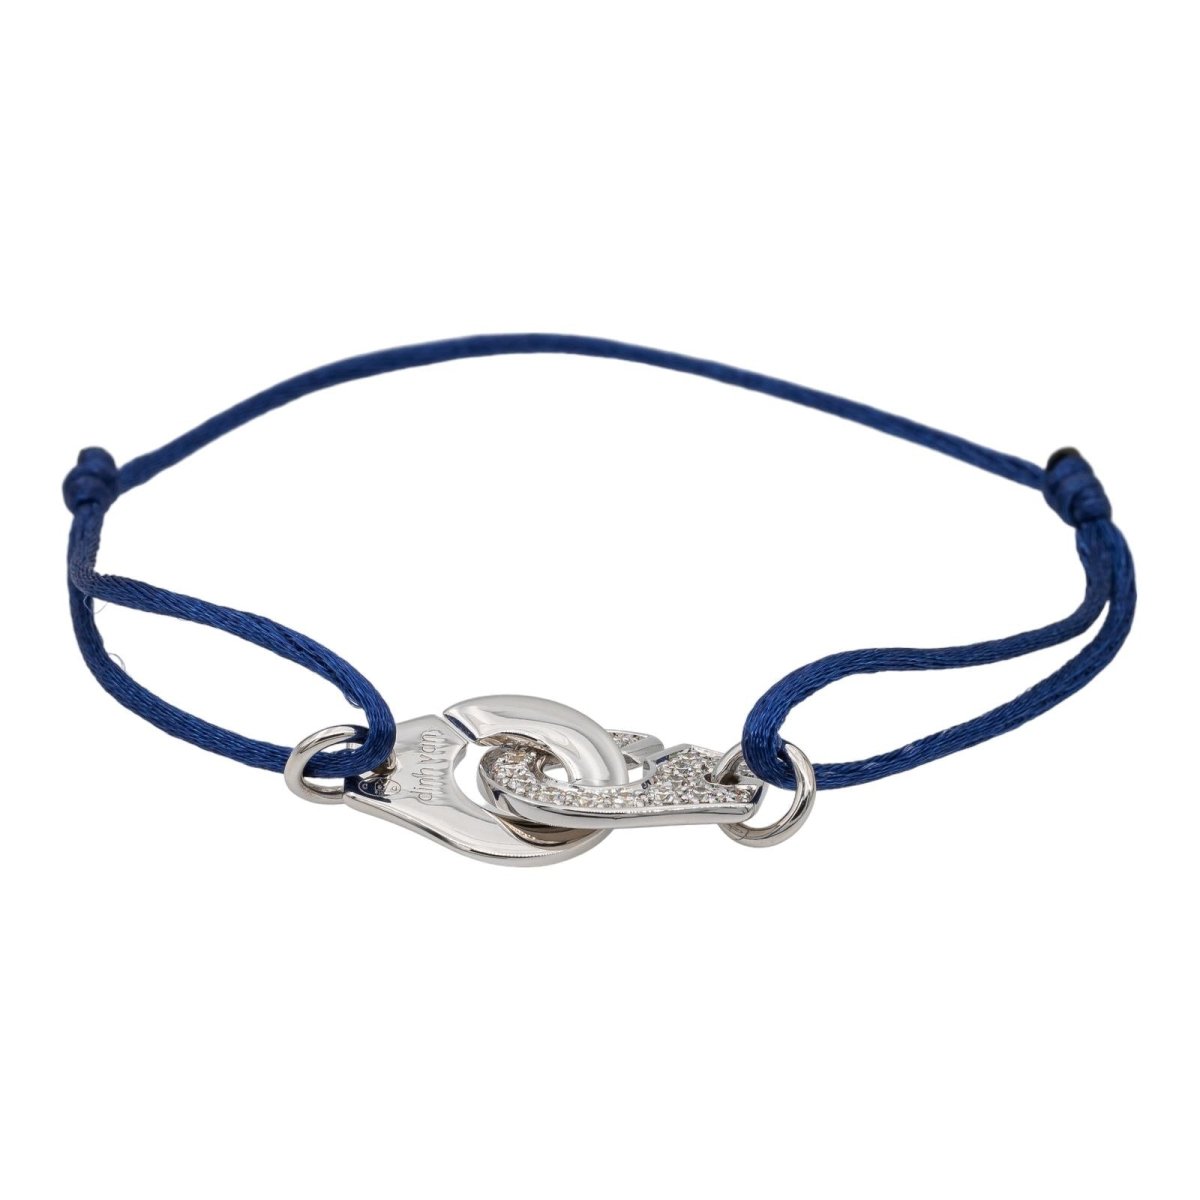 White gold Dinh Van bracelet, cord. | Bracelet cords, Bracelets, Gold